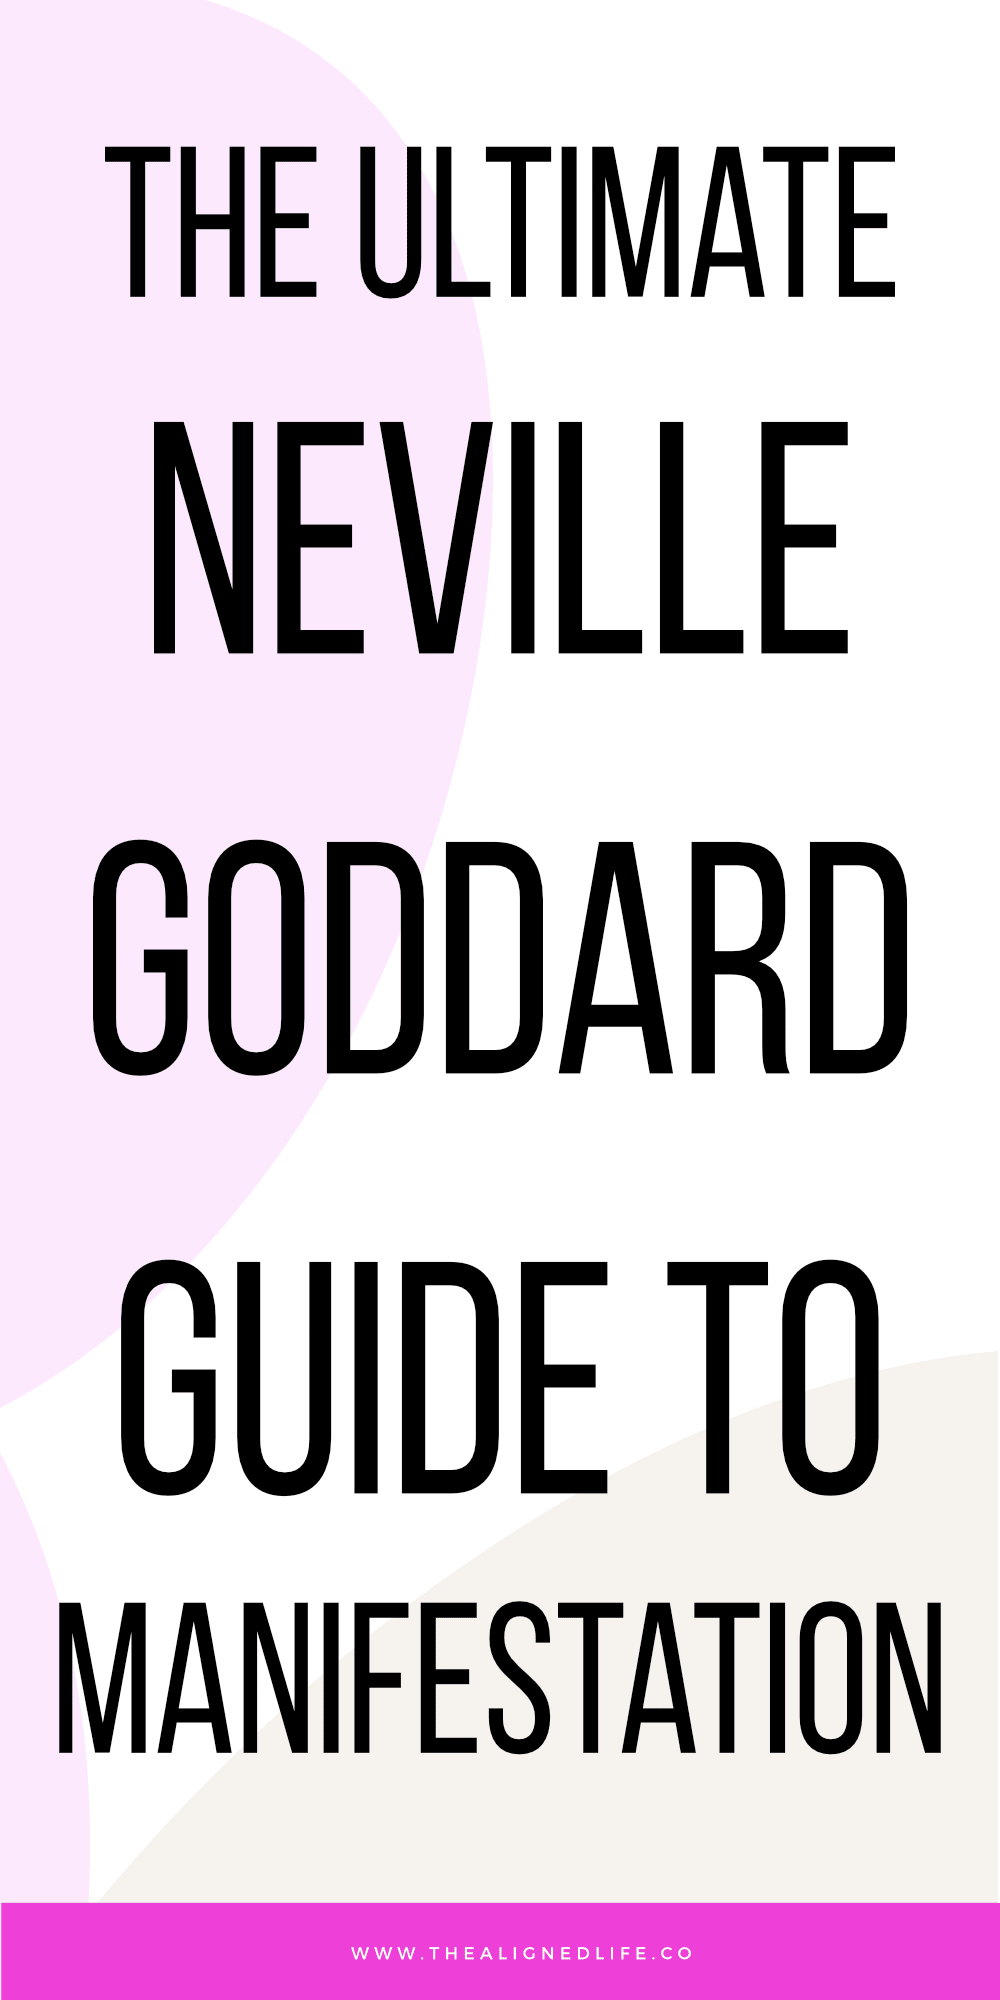 The Ultimate Neville Goddard Guide To Manifestation